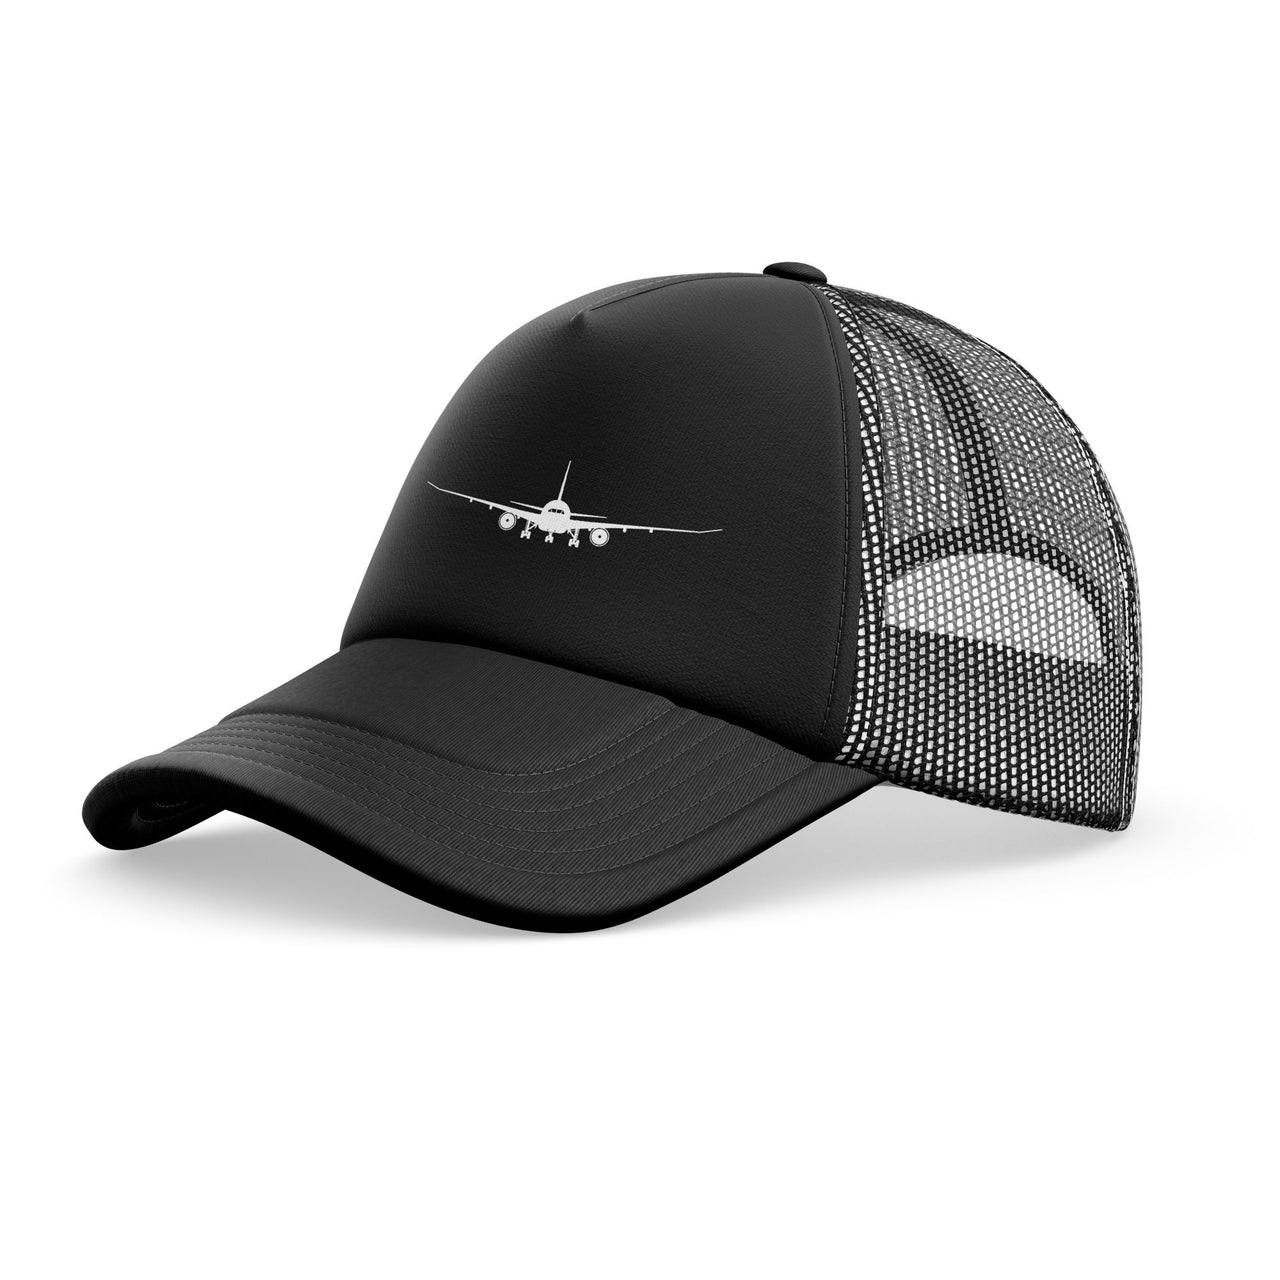 Boeing 787 Silhouette Designed Trucker Caps & Hats